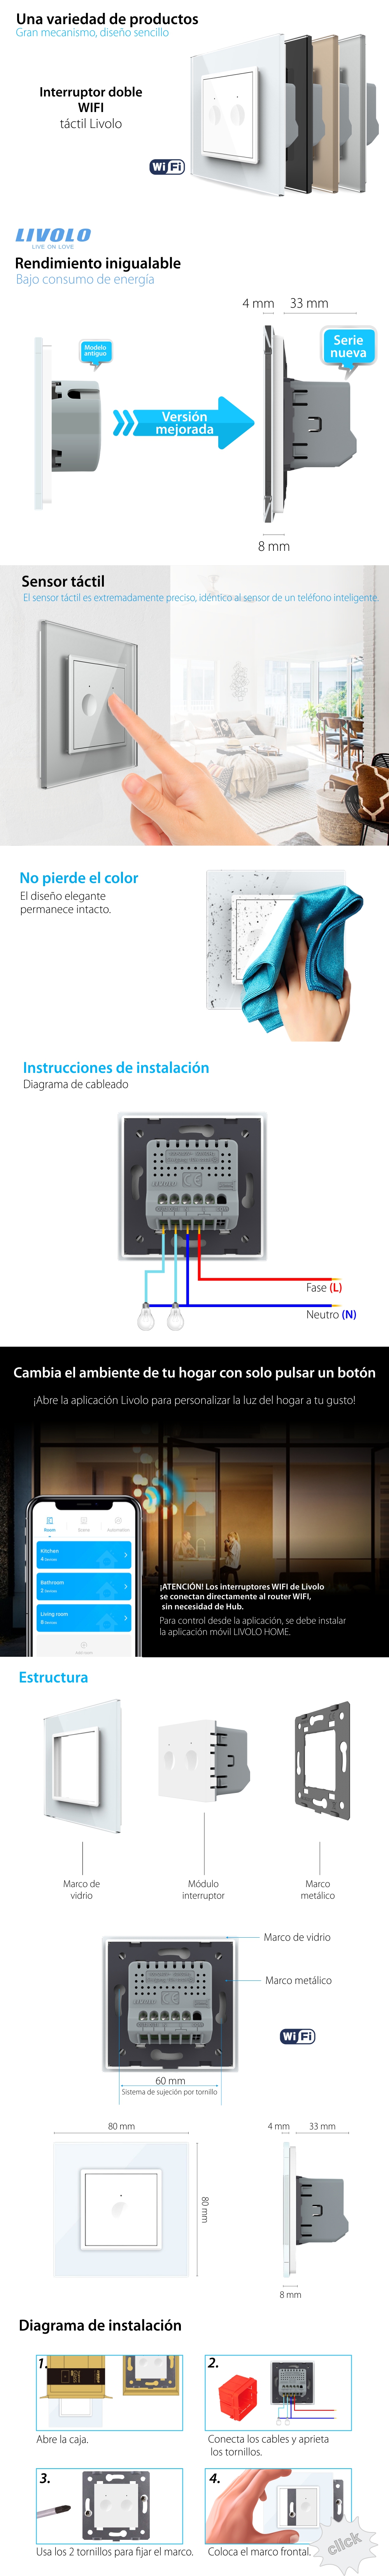 Interruptor doble táctil Wifi Livolo con marco de vidrio – Serie nueva